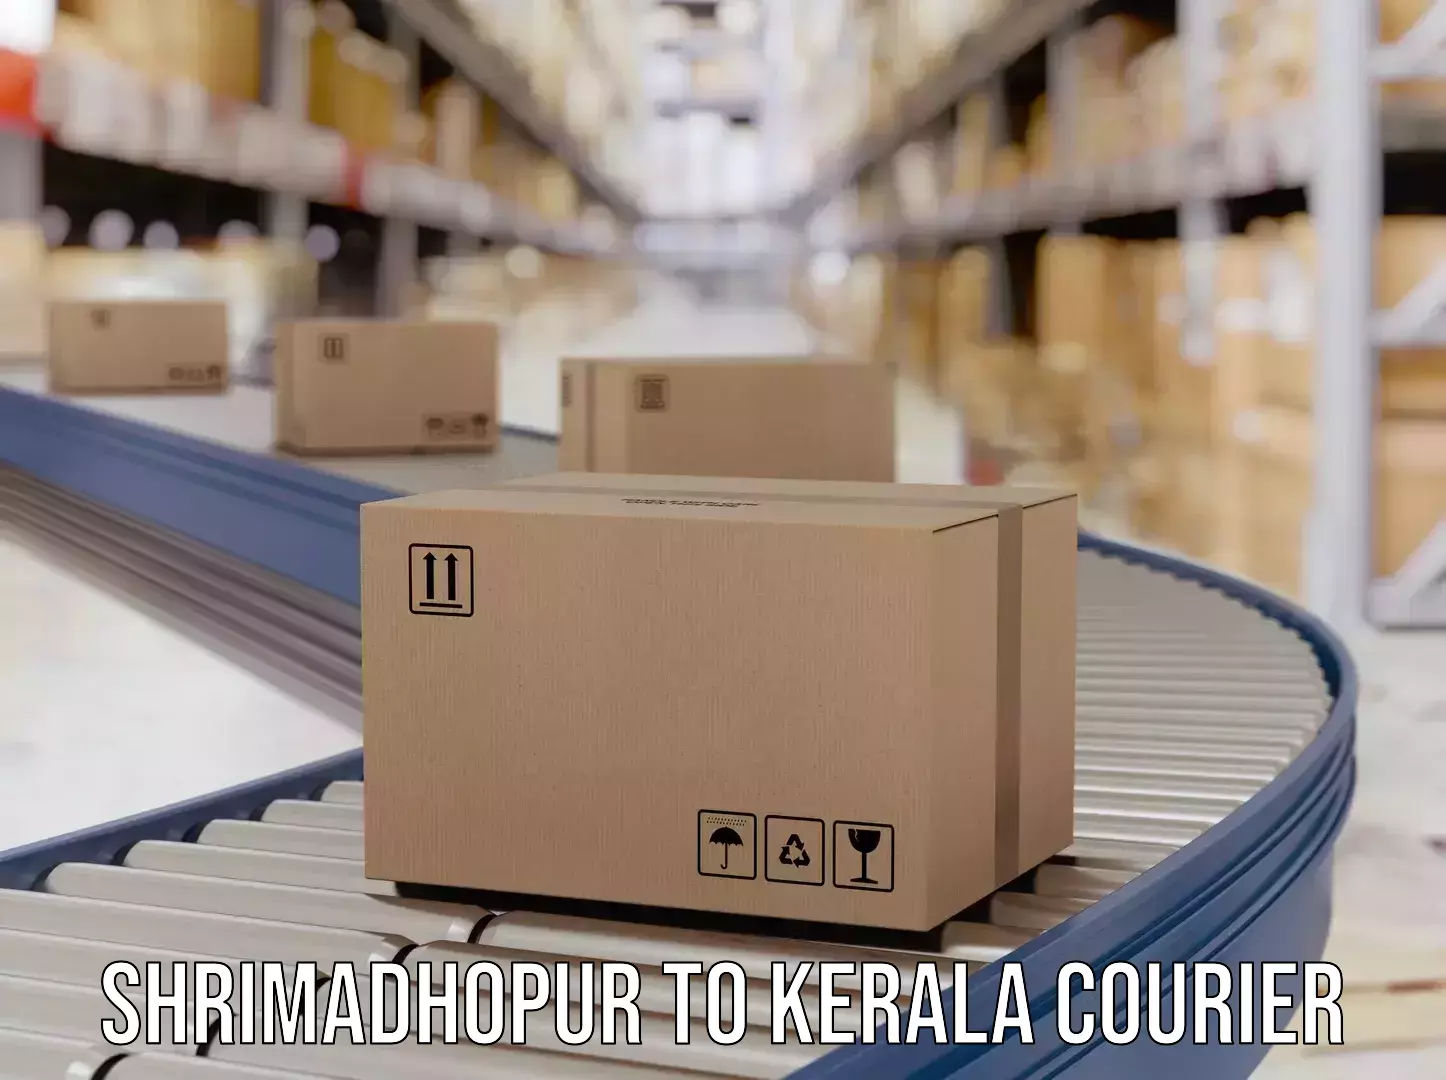 Courier service partnerships Shrimadhopur to Kozhencherry